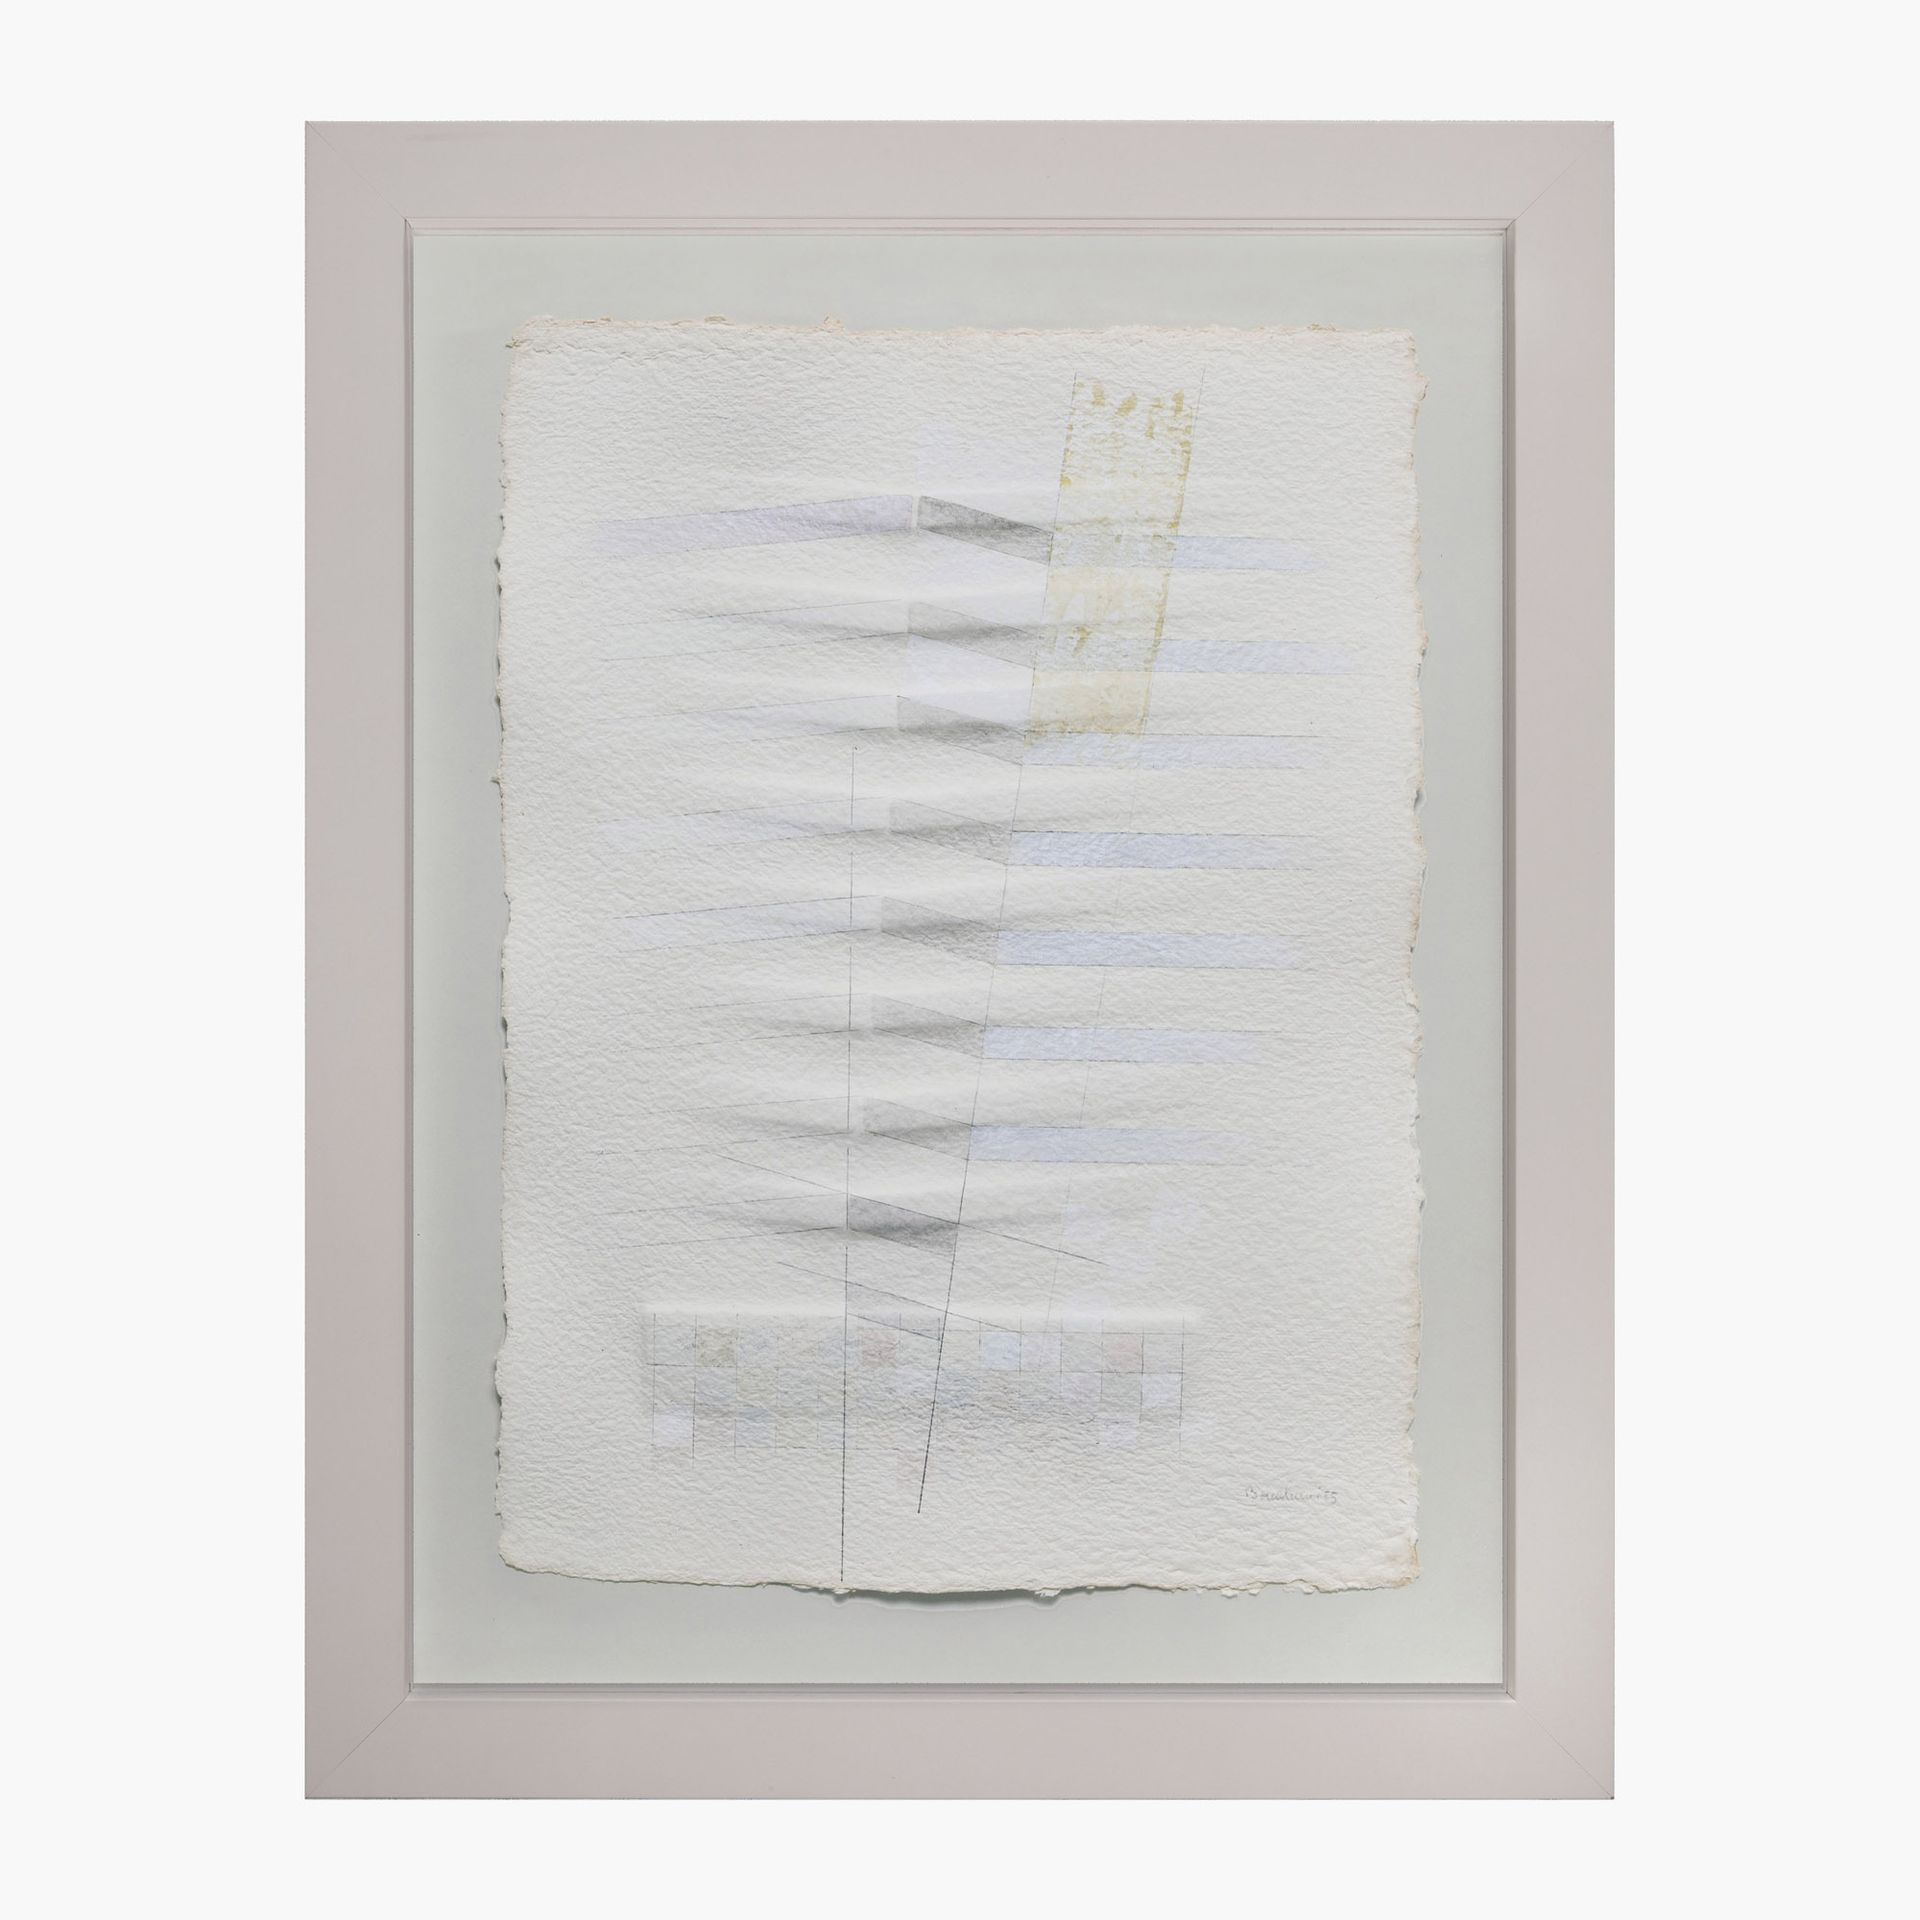 Agostino Bonalumi Agostino Bonalumi，无题



1985

伸缩纸和水彩

高61.5 x 长45厘米（高24.21 x 长&hellip;